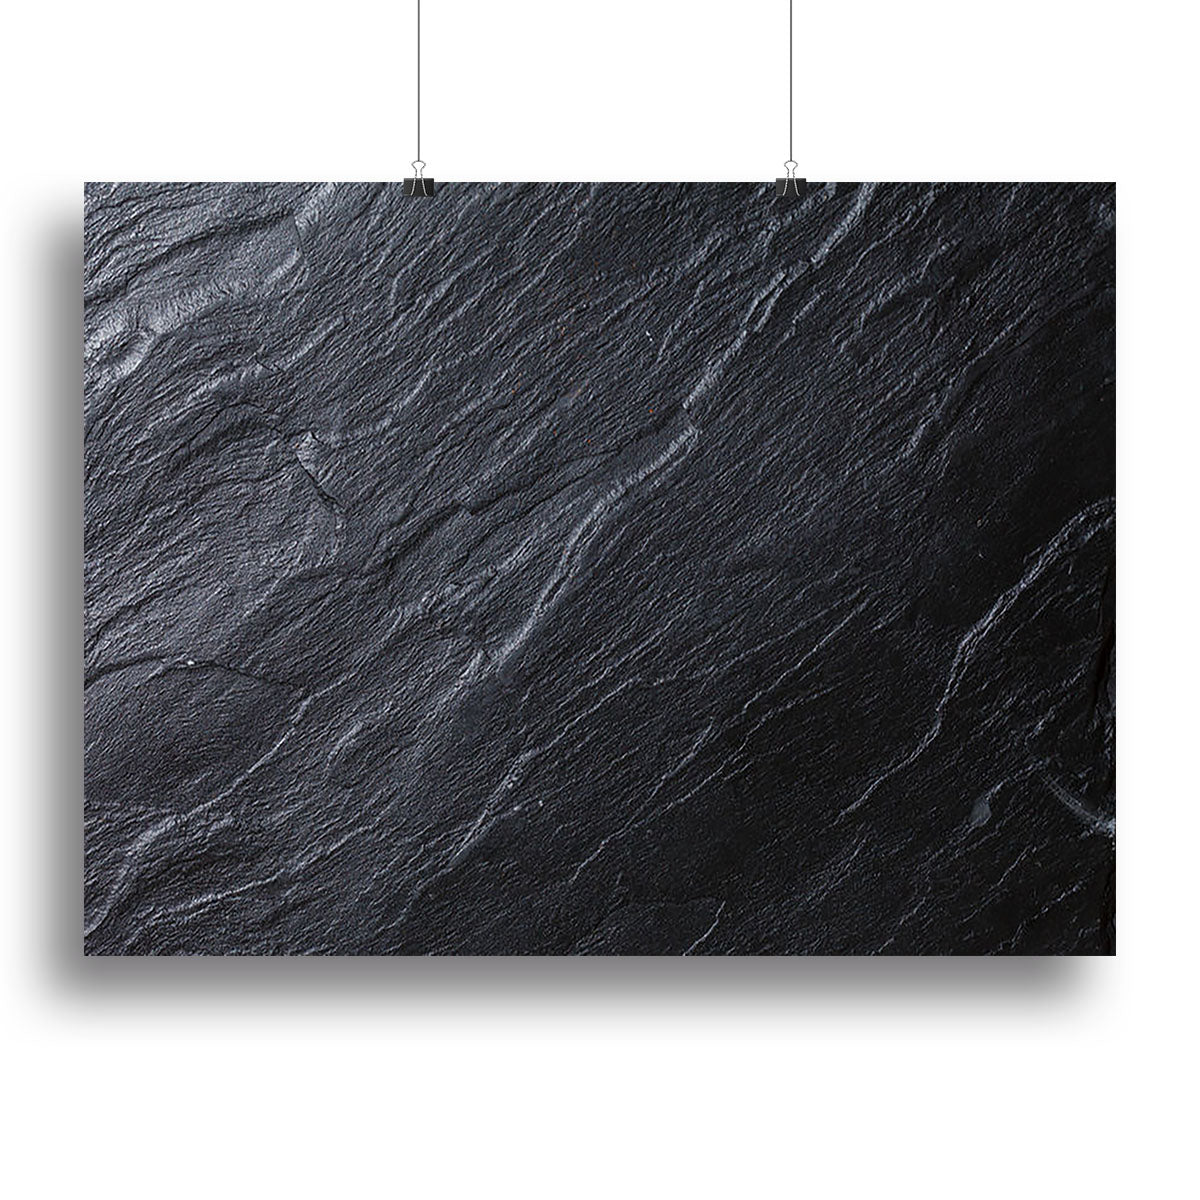 Black Textured Stone Canvas Print or Poster - Canvas Art Rocks - 2